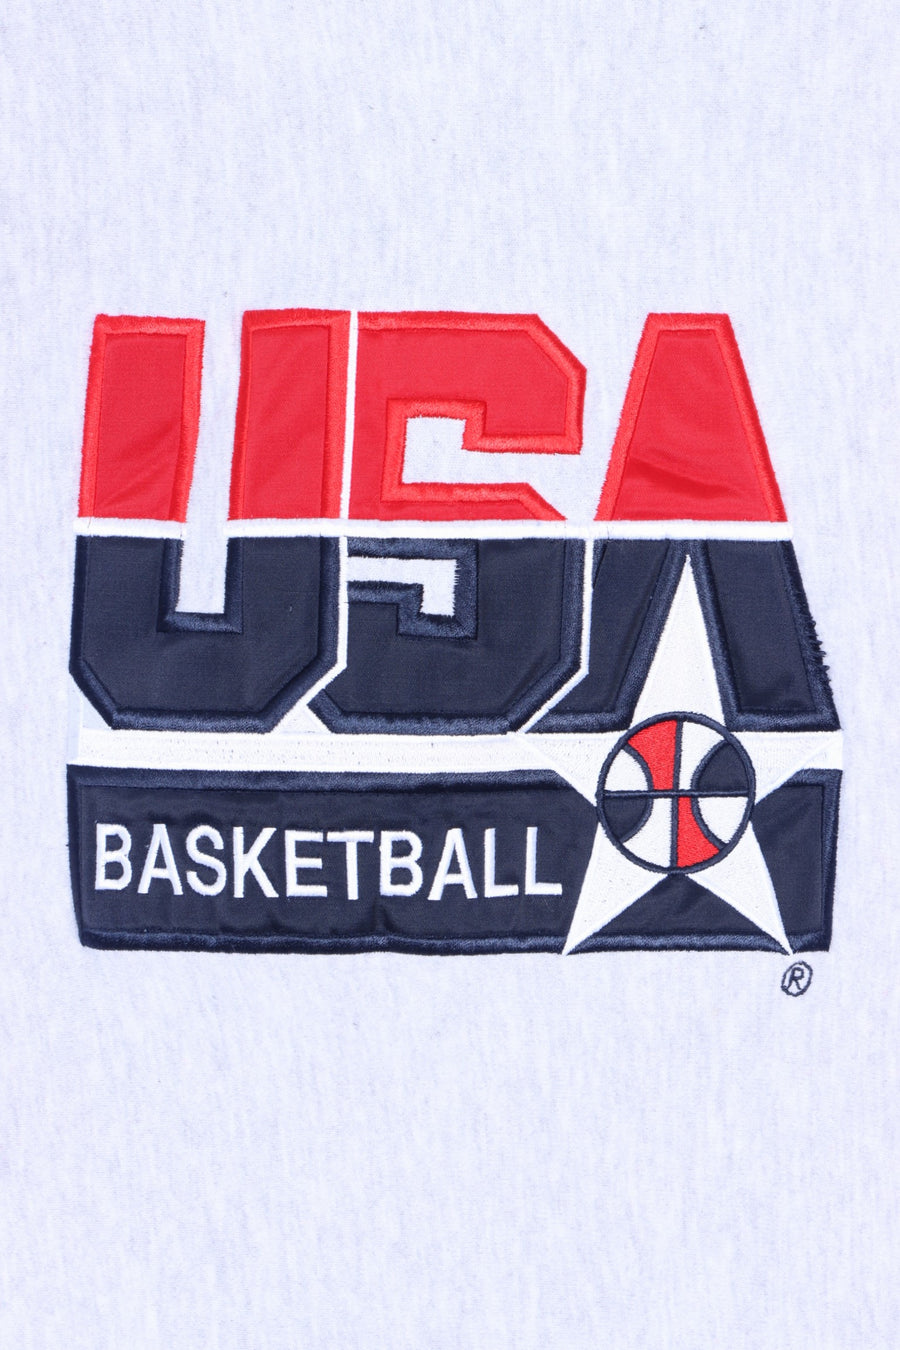 USA Basketball Embroidered CHAMPION Reverse Weave Sweatshirt USA Made (S-M)